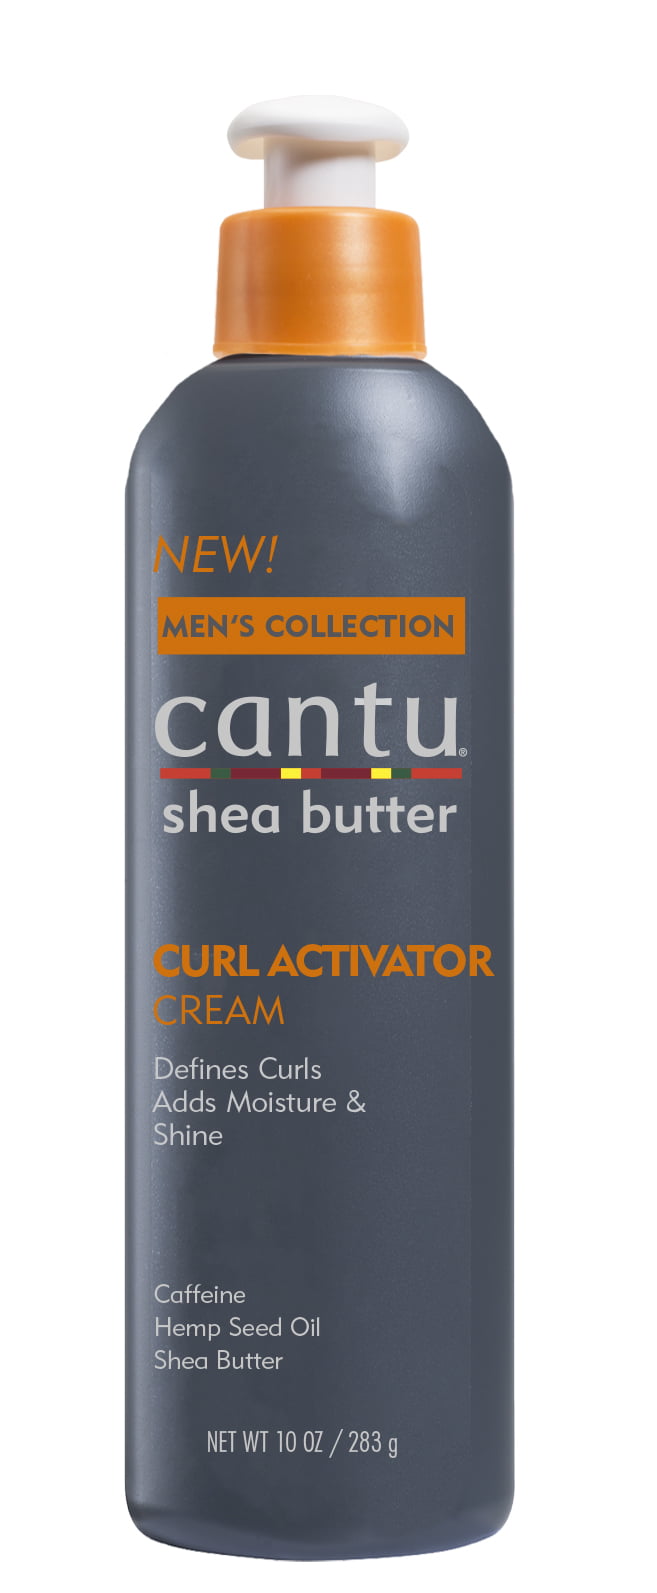 Cantu Men's Curl Activator Cream with Caffeine, Hemp Seed Oil, and Shea Butter, 10 oz.